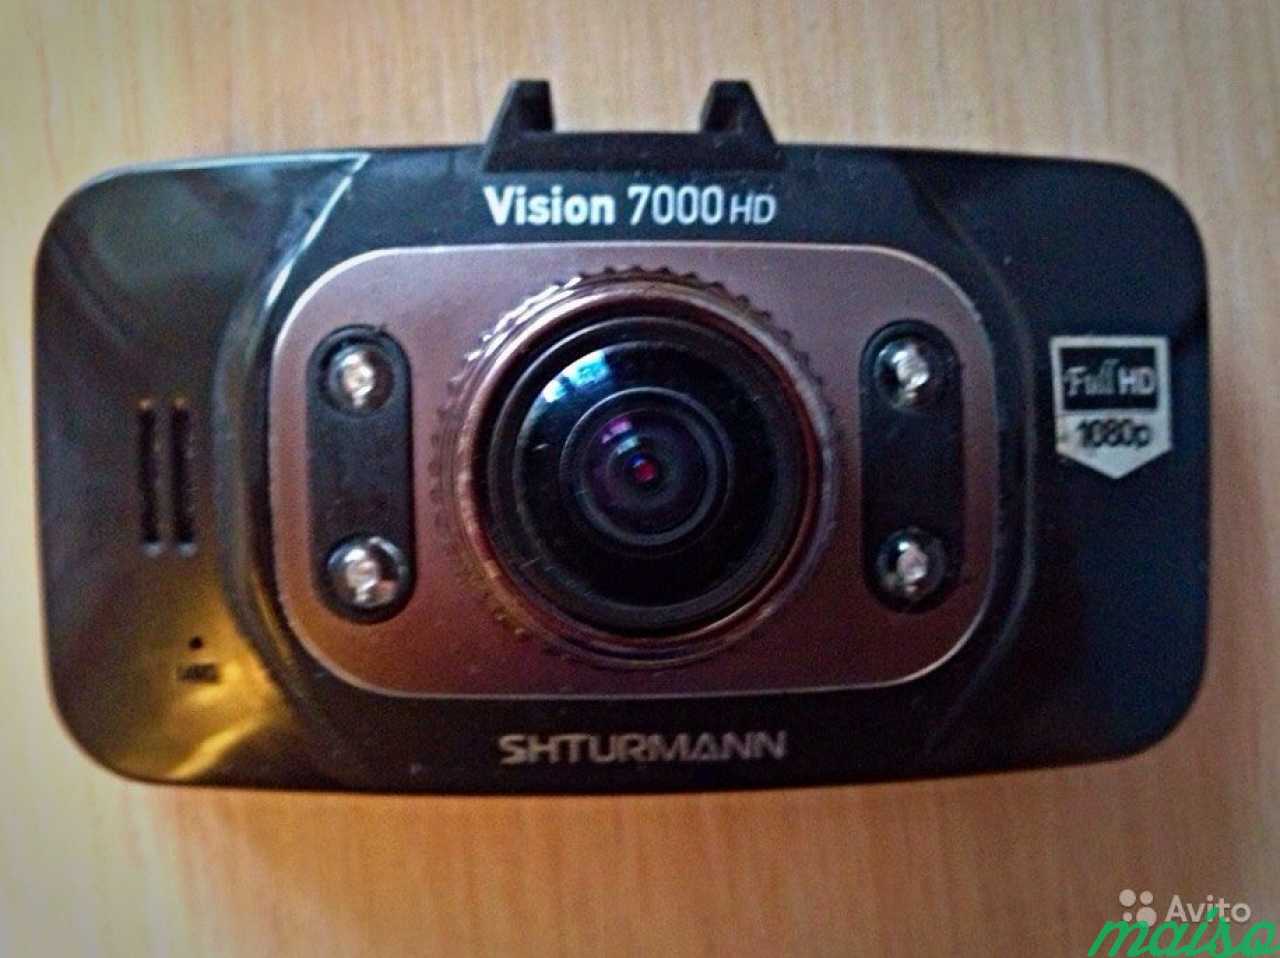 Vision регистратор. Видеорегистратор Shturmann Vision 7000hd. Shturmann Vision 6000.